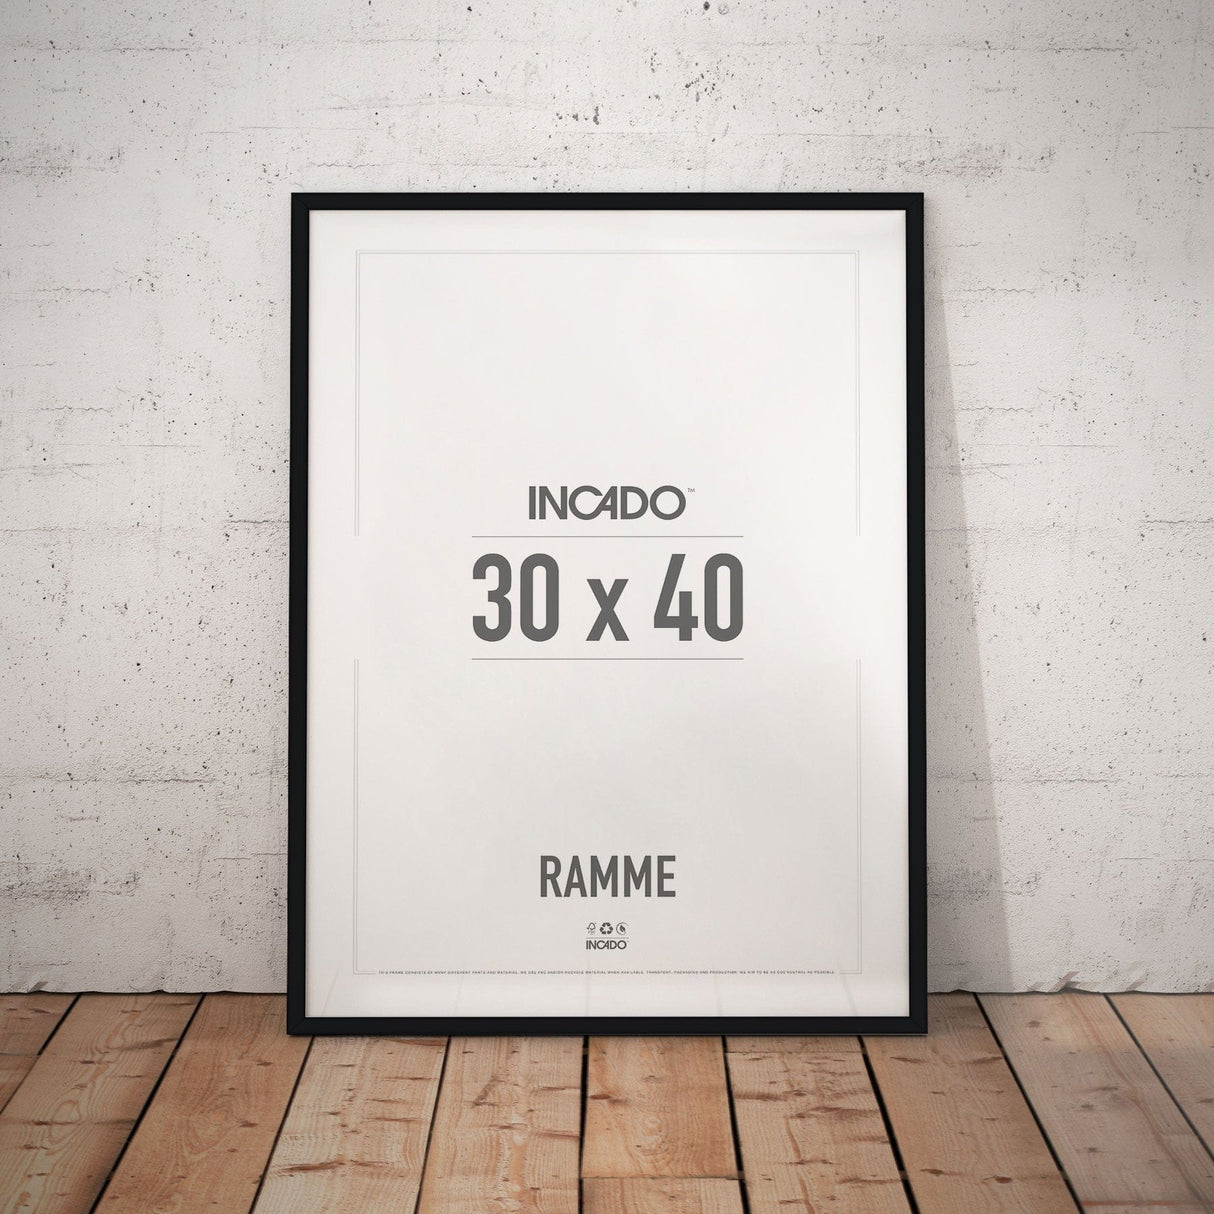 Sort Ramme - Incado NordicLine - 30 x 40 cm